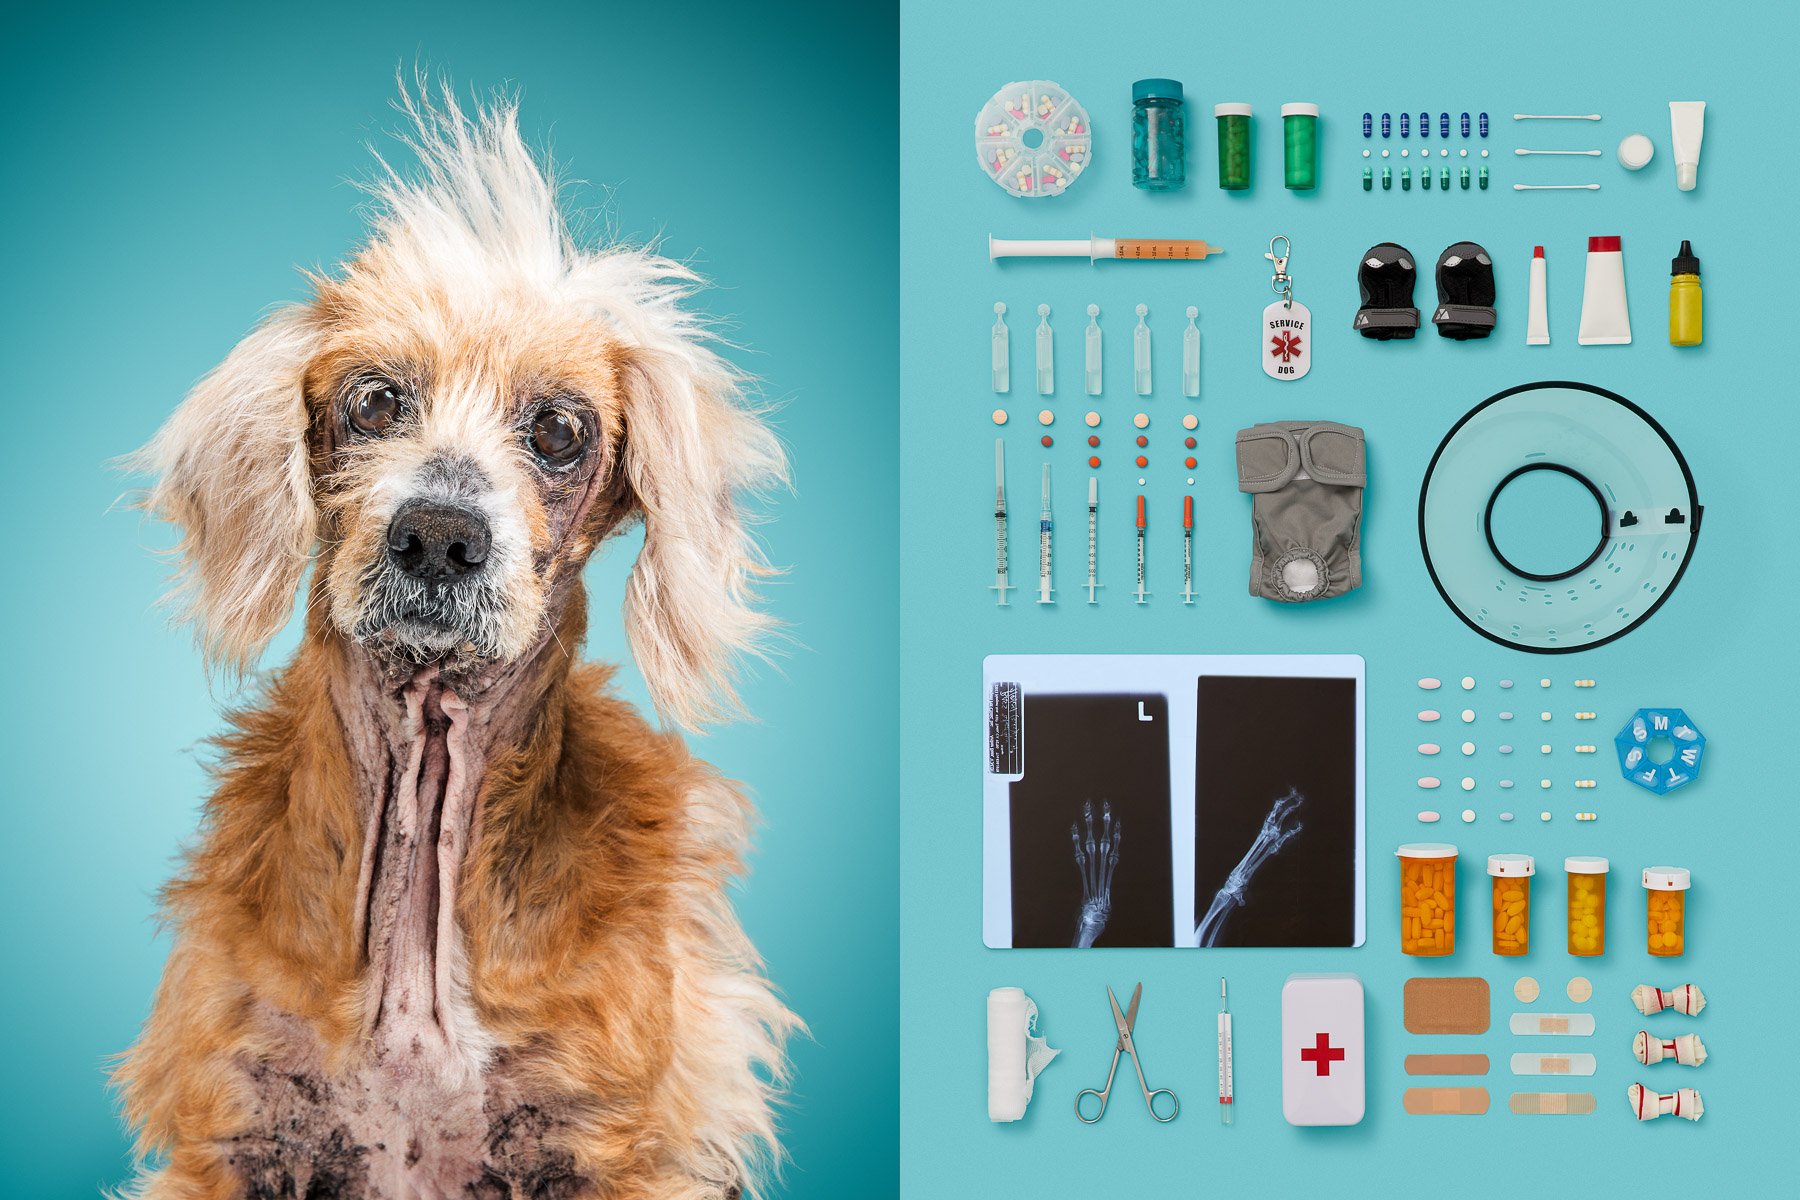 Old-senior-series-dog-portraits-knolling-medical-pills-objects-animal-photographer.jpg